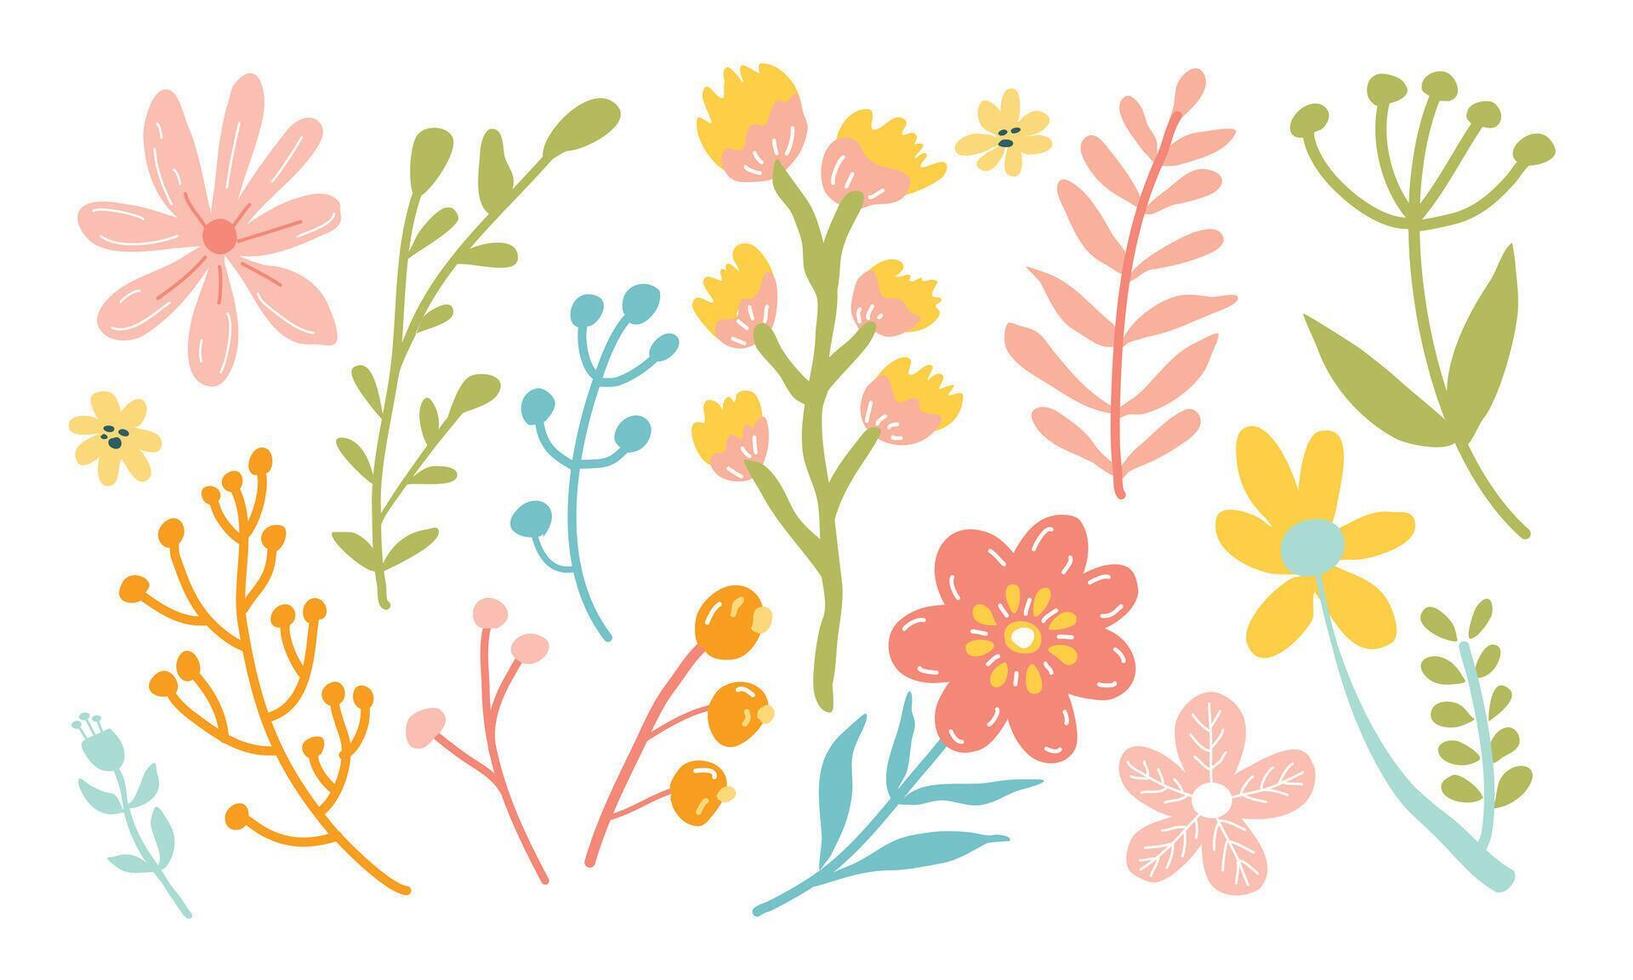 mano dibujado flor recopilación. vector flores primavera Arte impresión con botánico elementos. contento Pascua de Resurrección